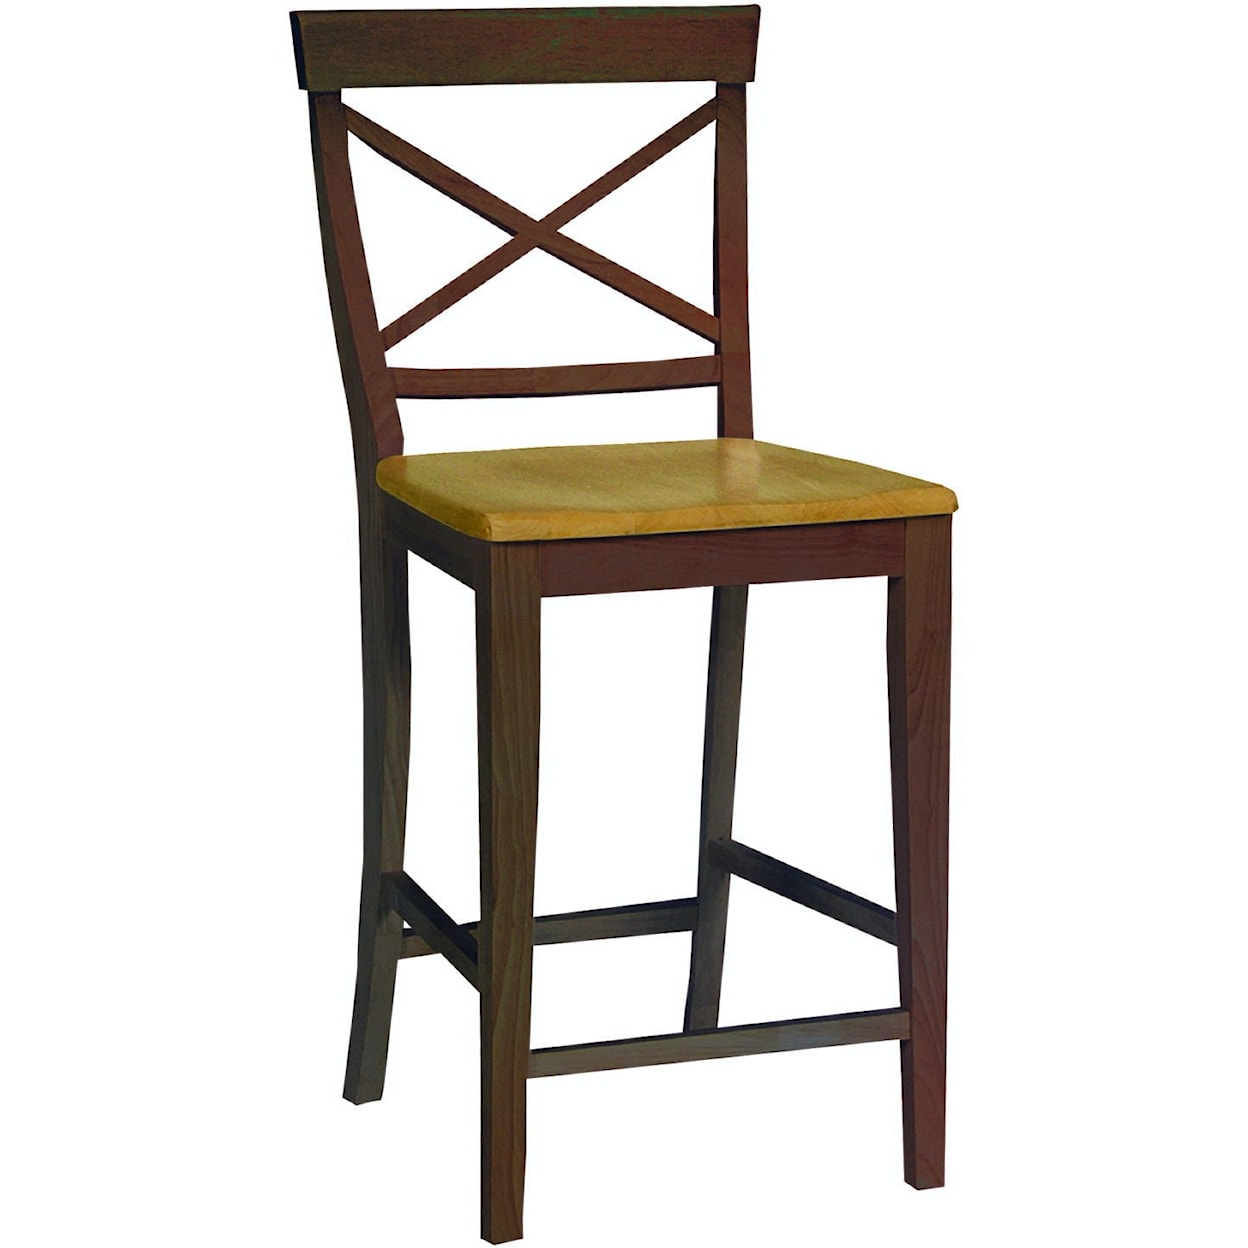 John Thomas Dining Essentials X-Back Chair in Cinnamon / Espresso